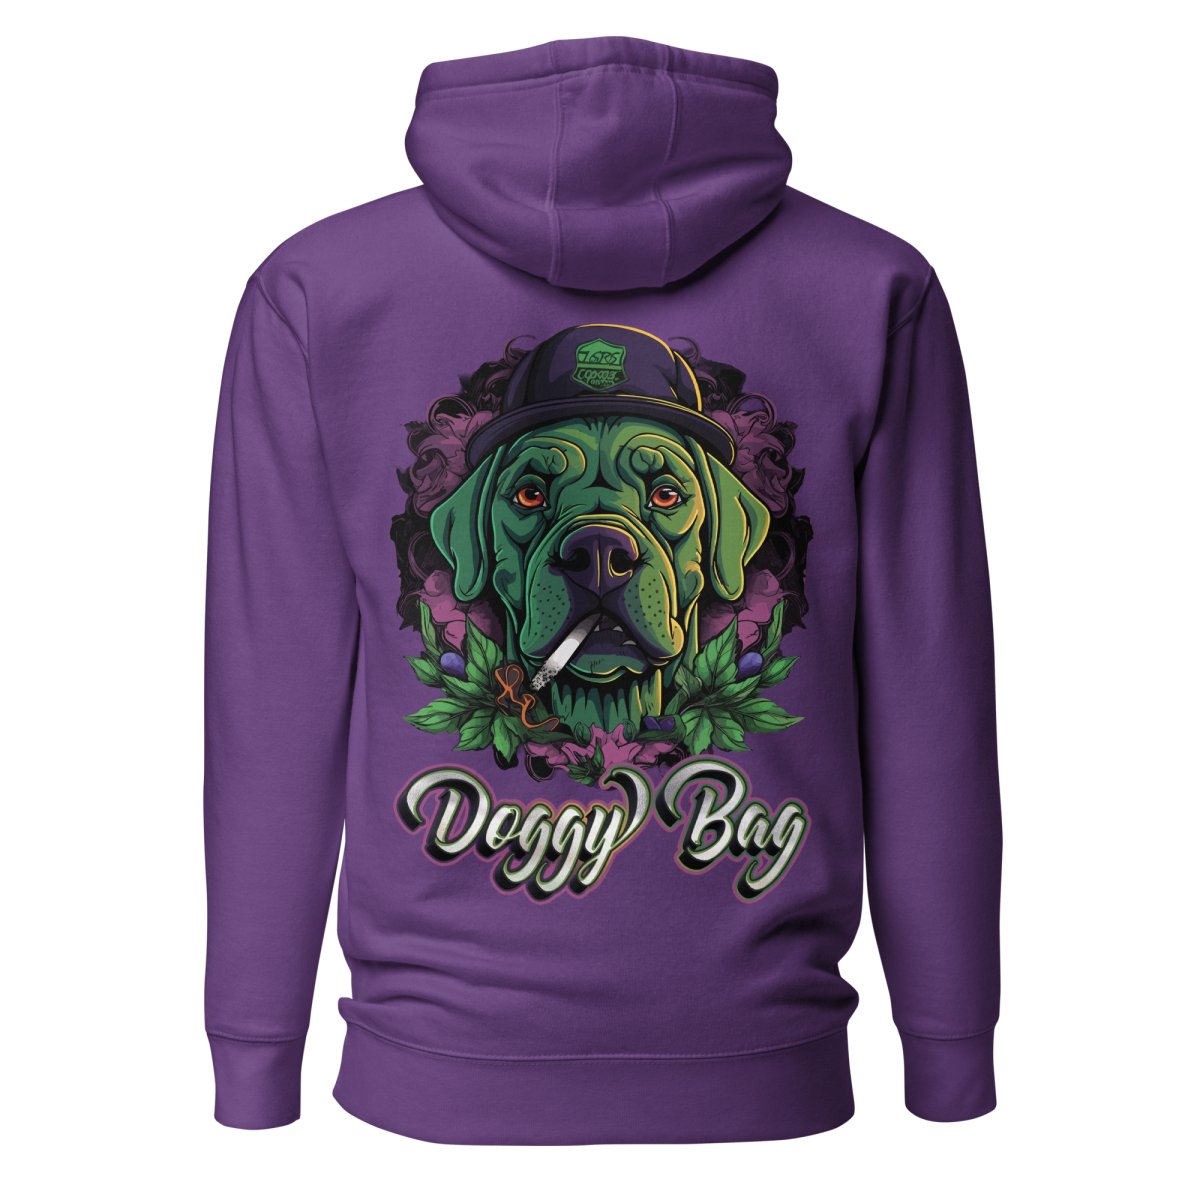 Doggy Bag Hoodie - Mainly High